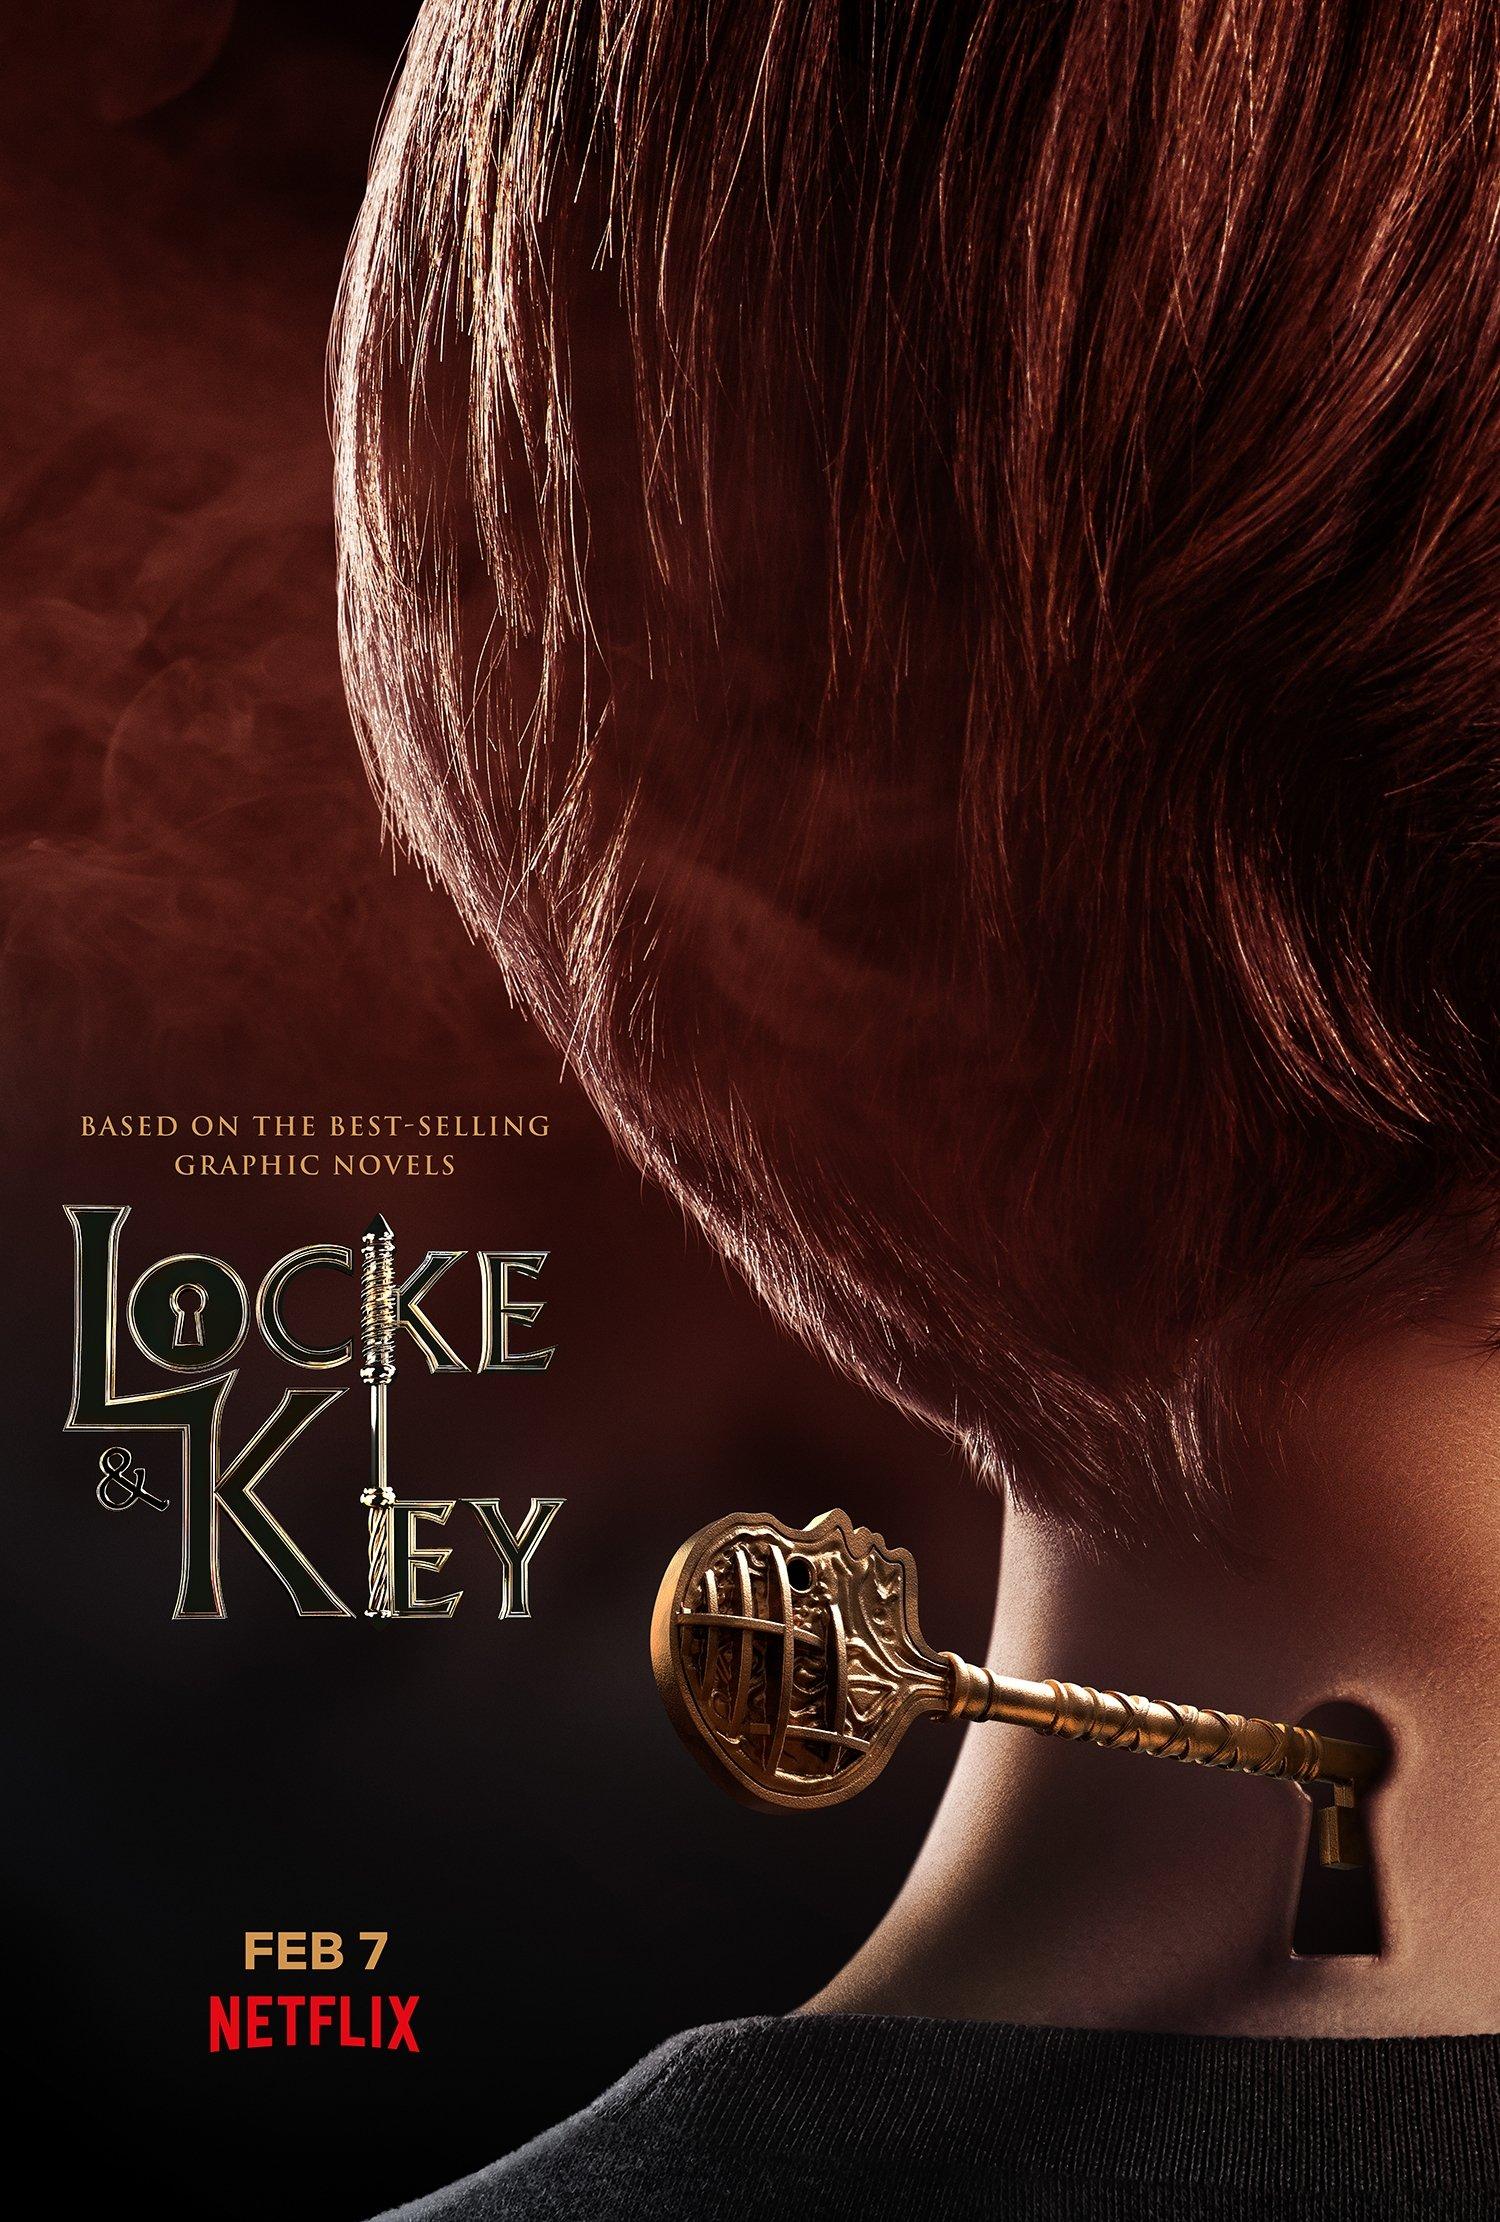 Poster phim Locke & Key. (Ảnh: Internet)